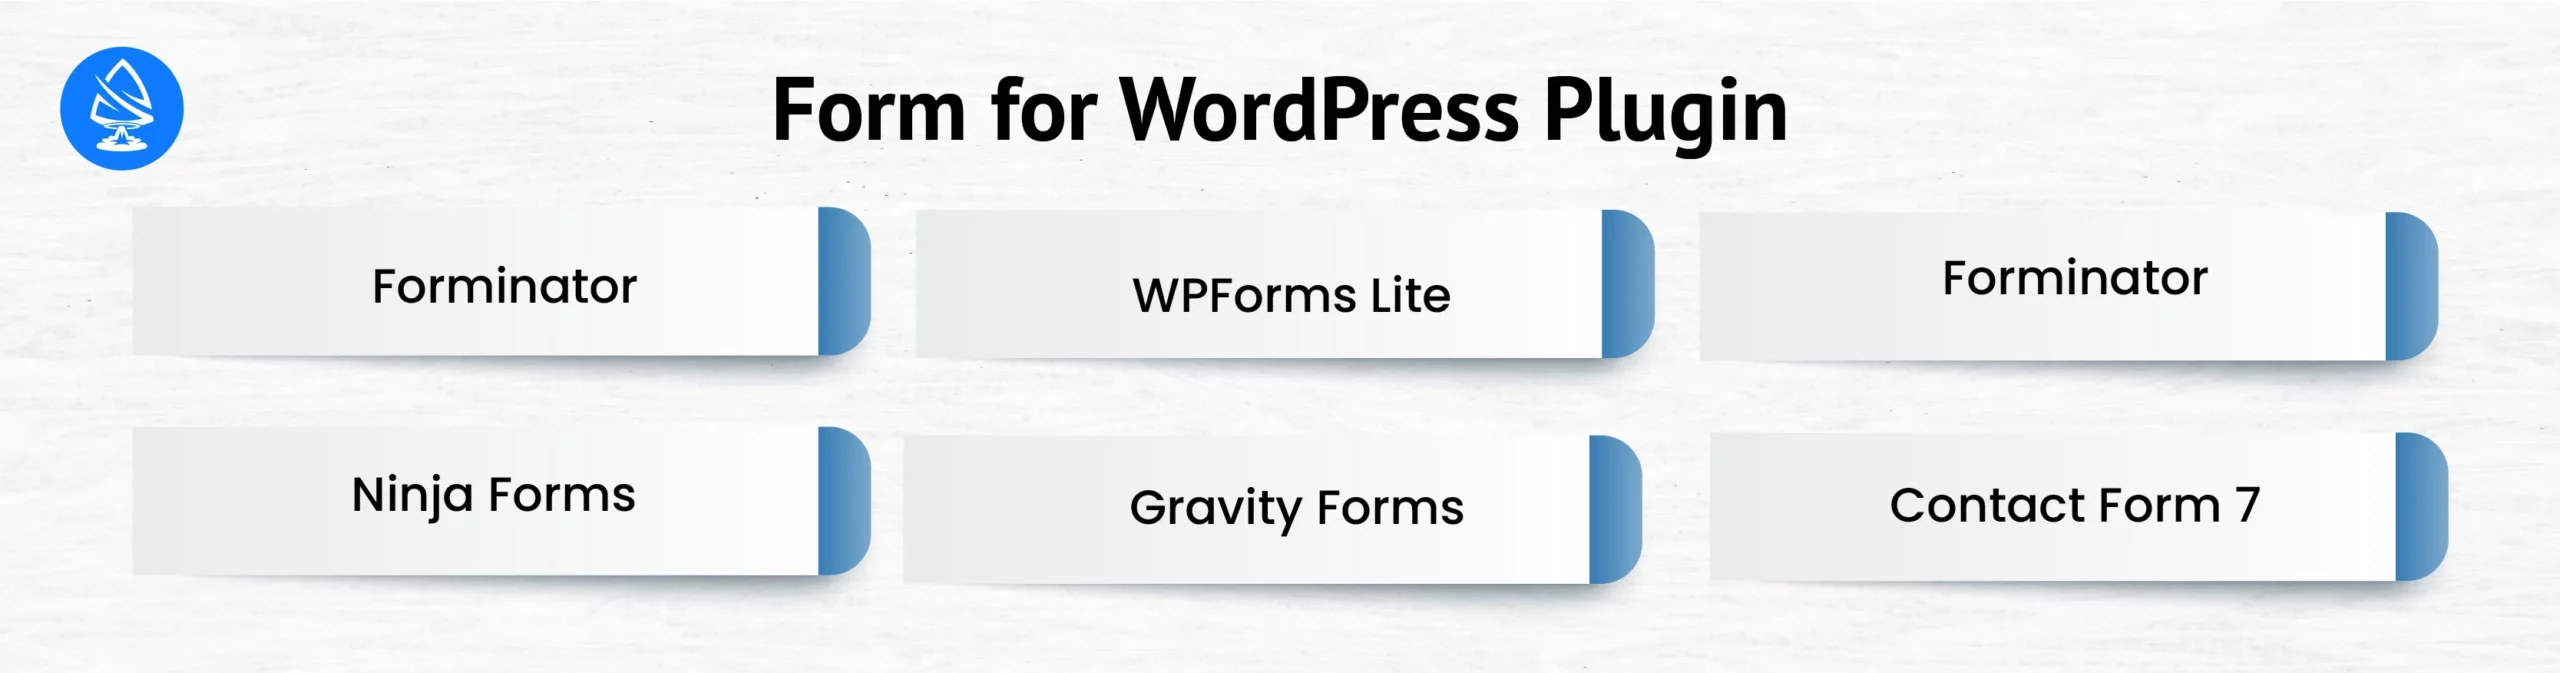 Form for WordPress Plugin